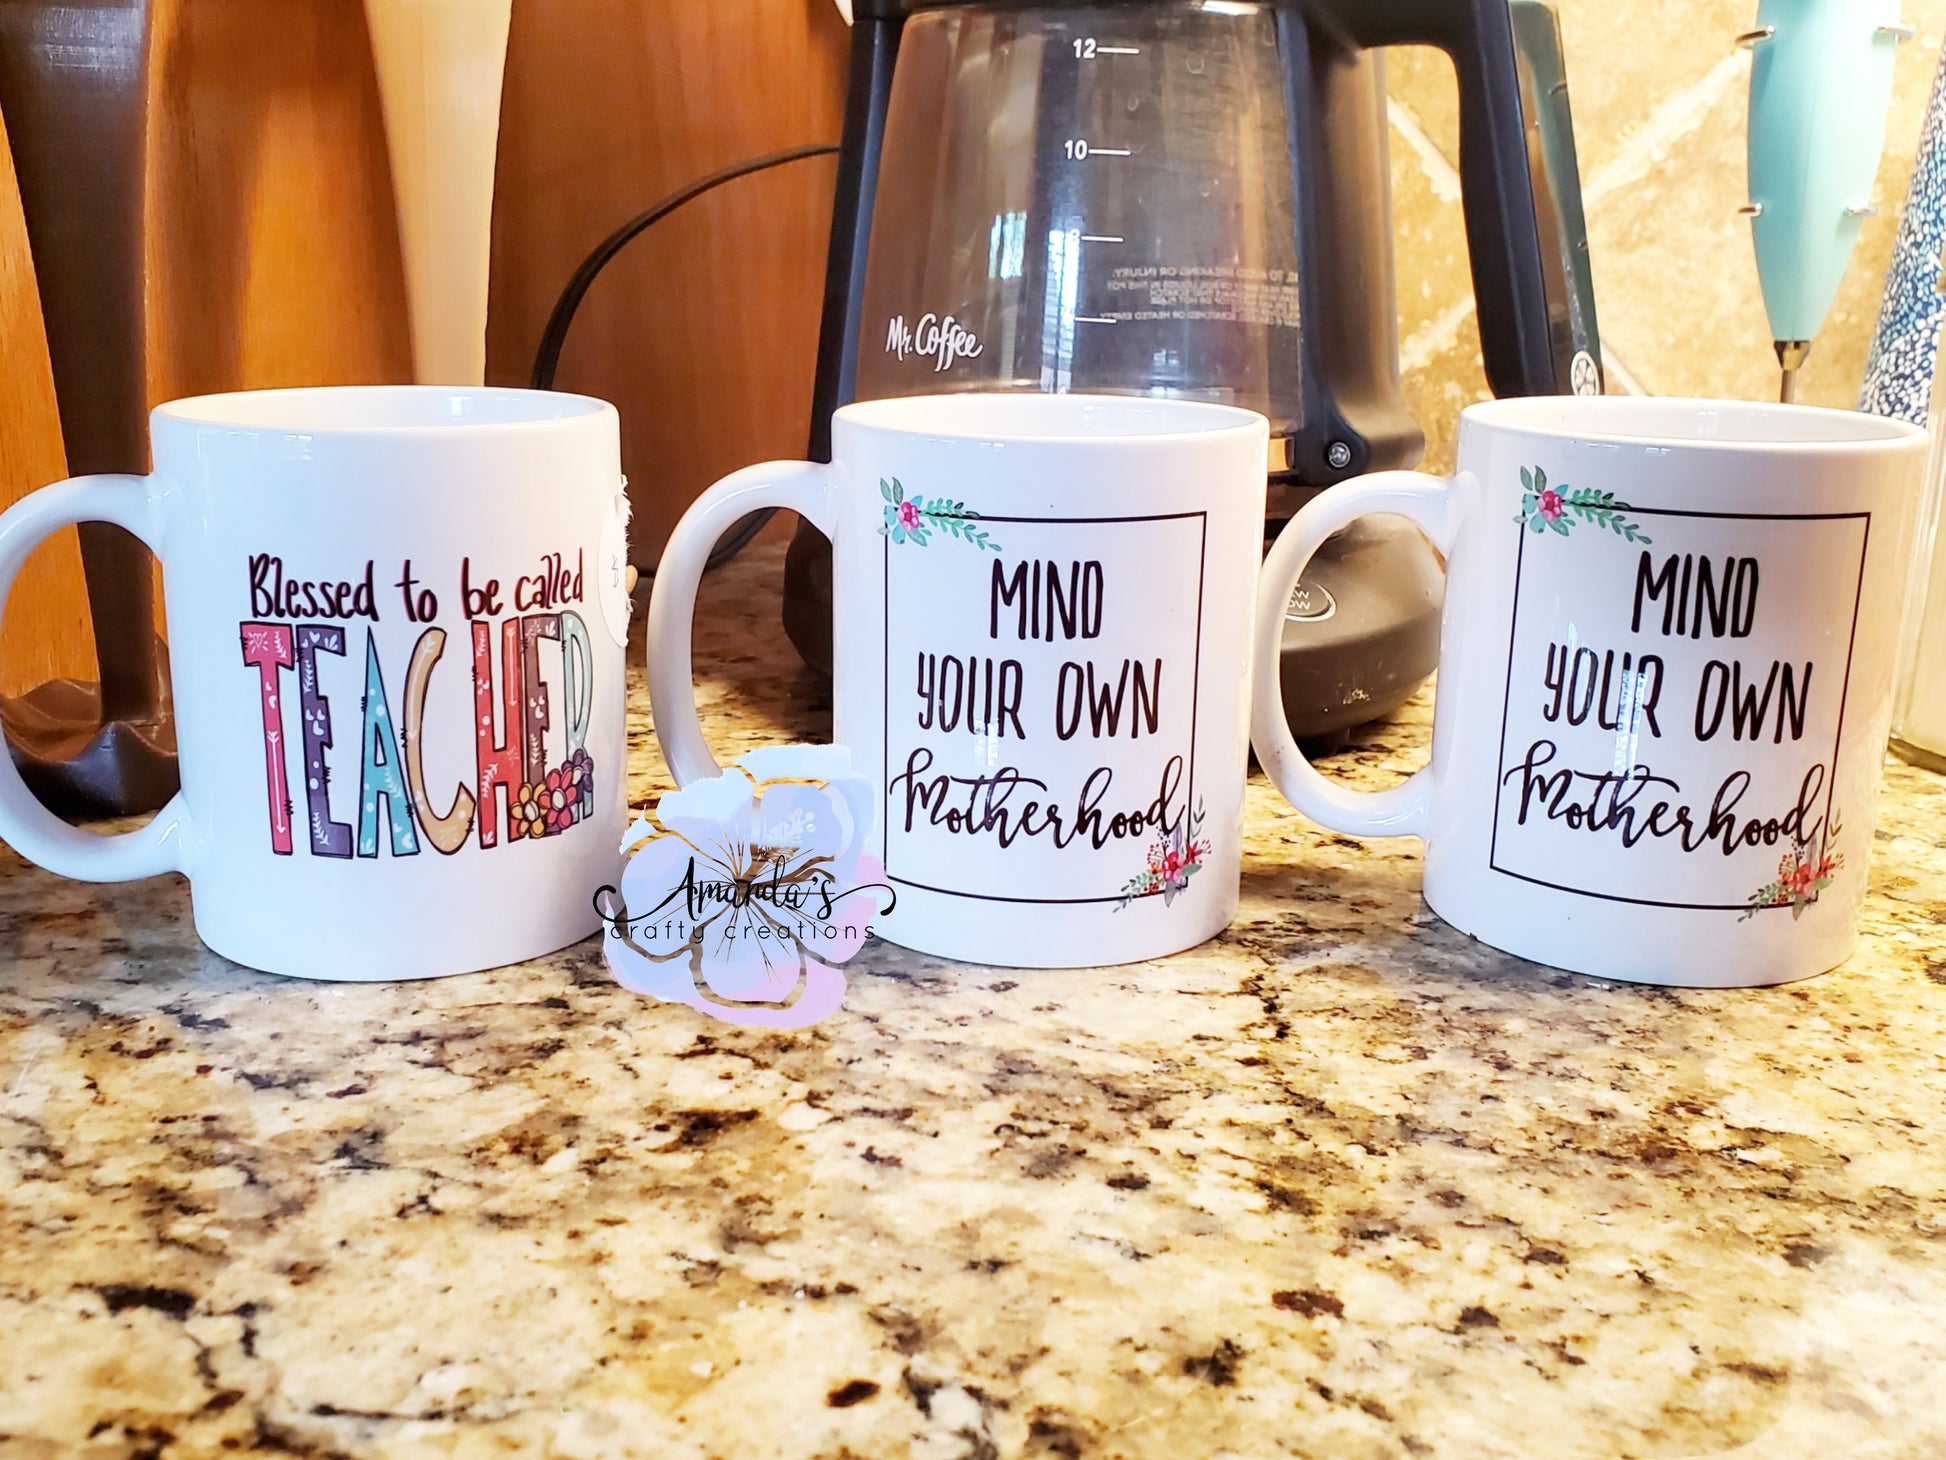 Blessed to be called teacher coffee mug and Mind your own motherhood coffee mug